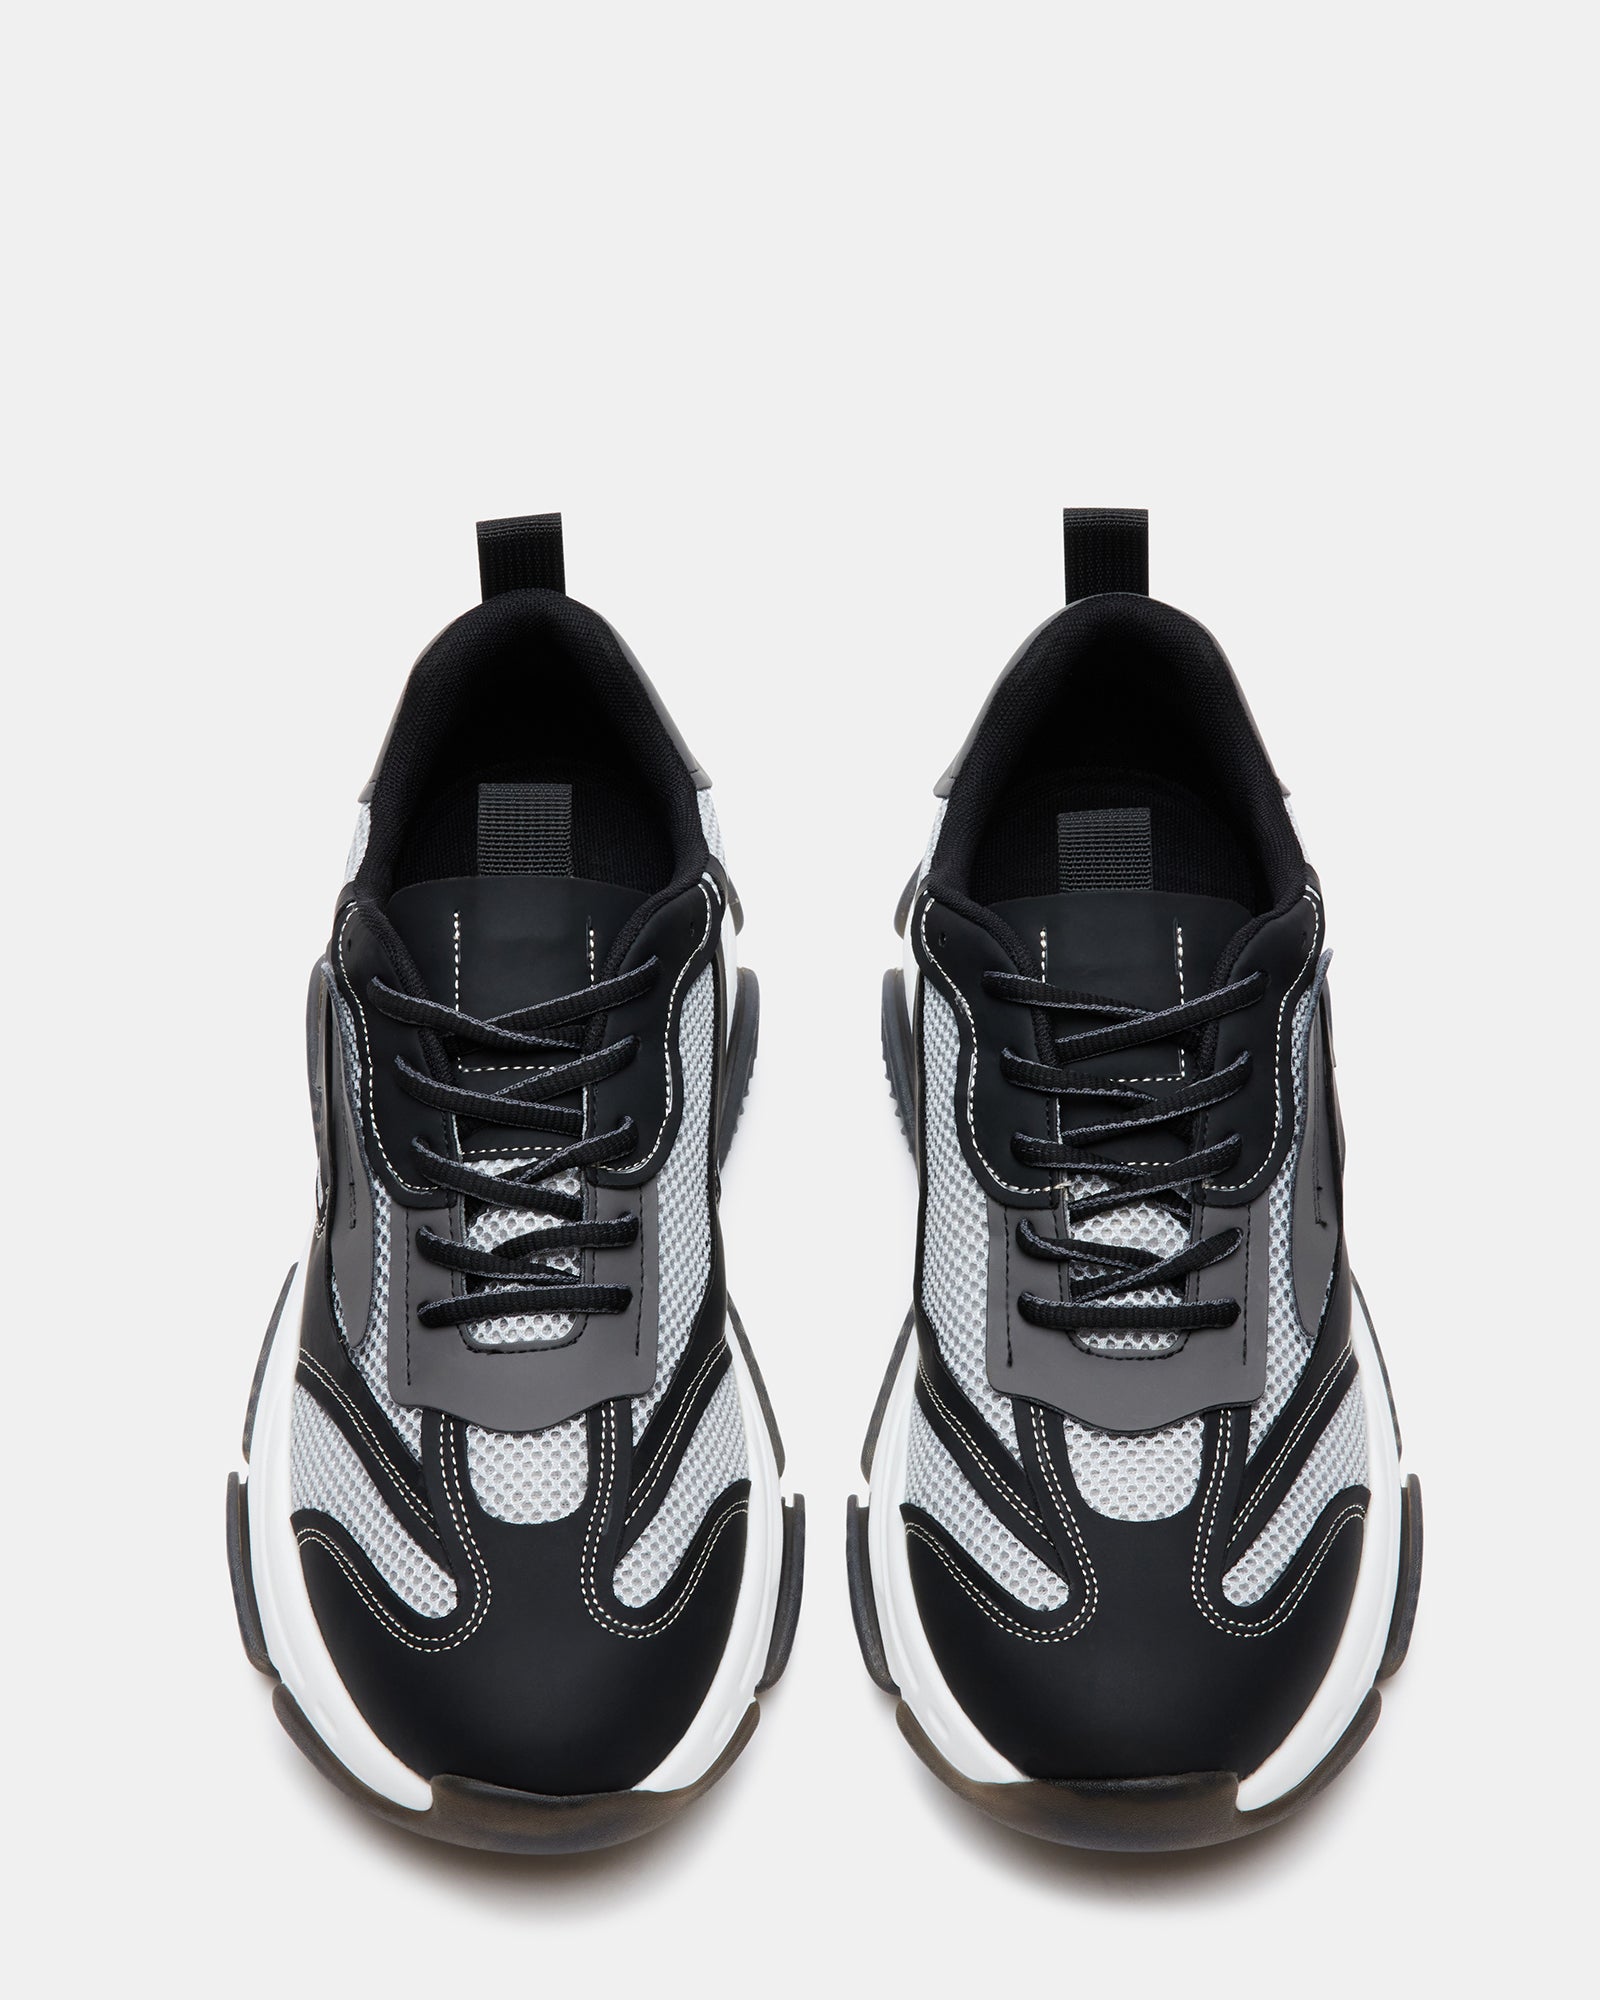 POSSESS Dark Grey/Light Grey Low-Top Sneaker | Men's Lace-Up Sneakers ...